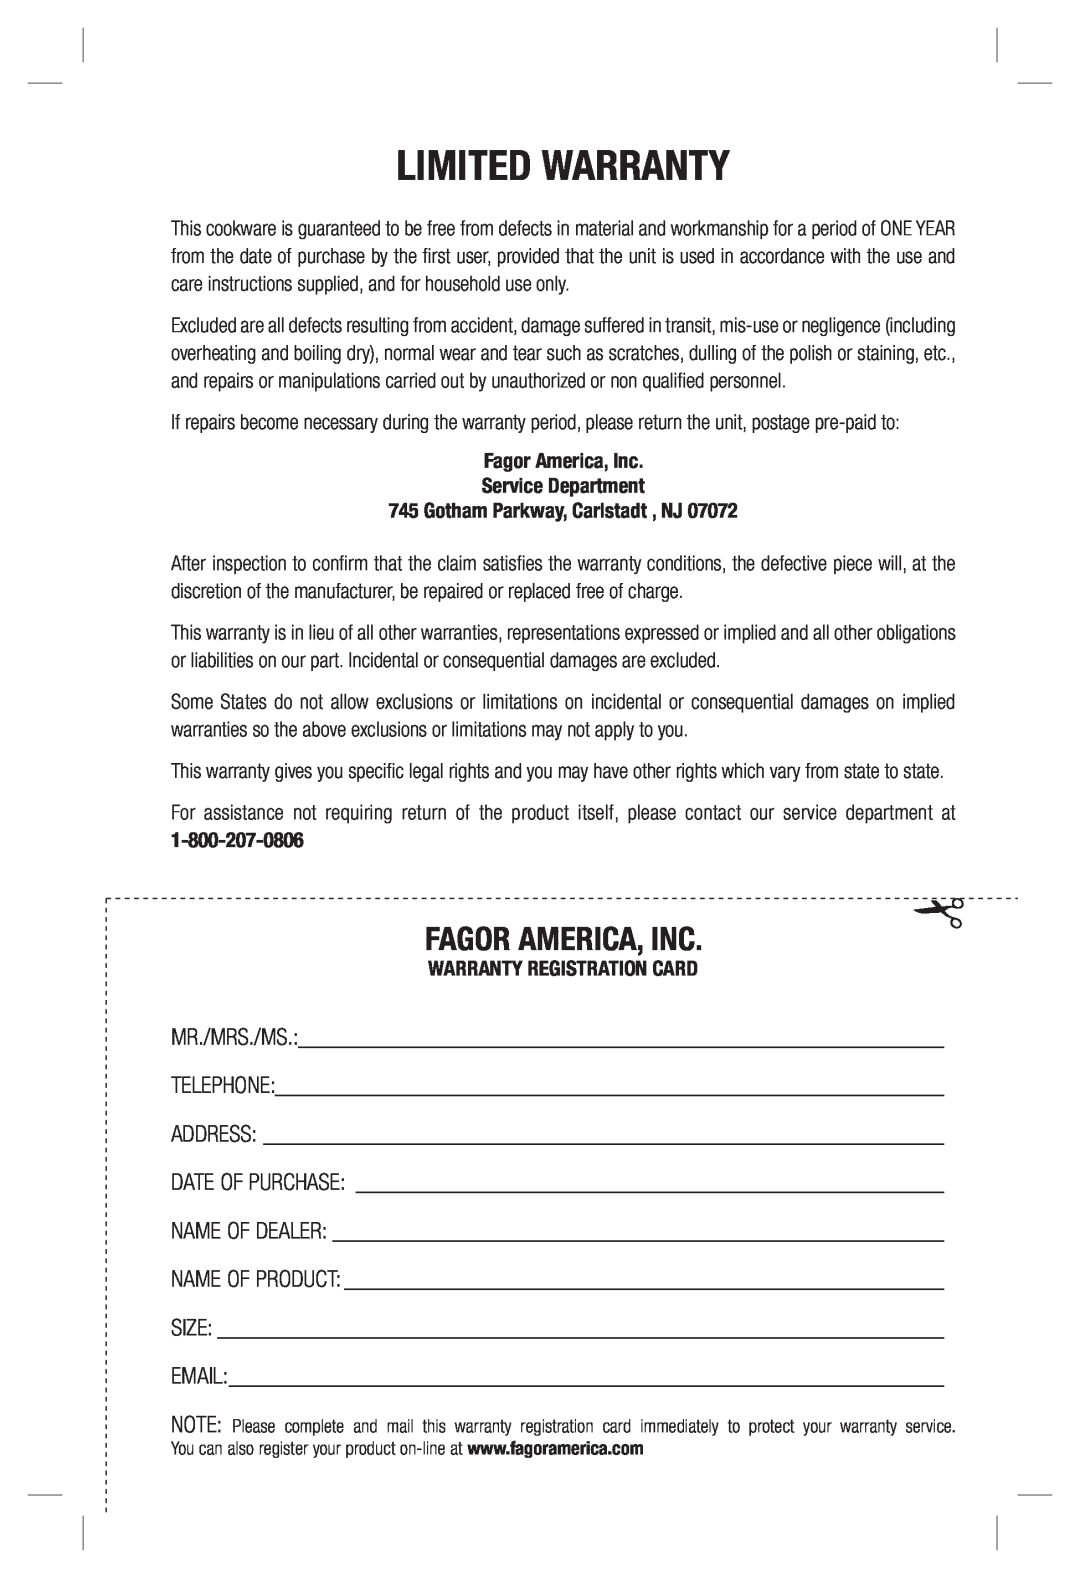 Fagor America Double Boiler manual Limited Warranty, Fagor America, Inc 